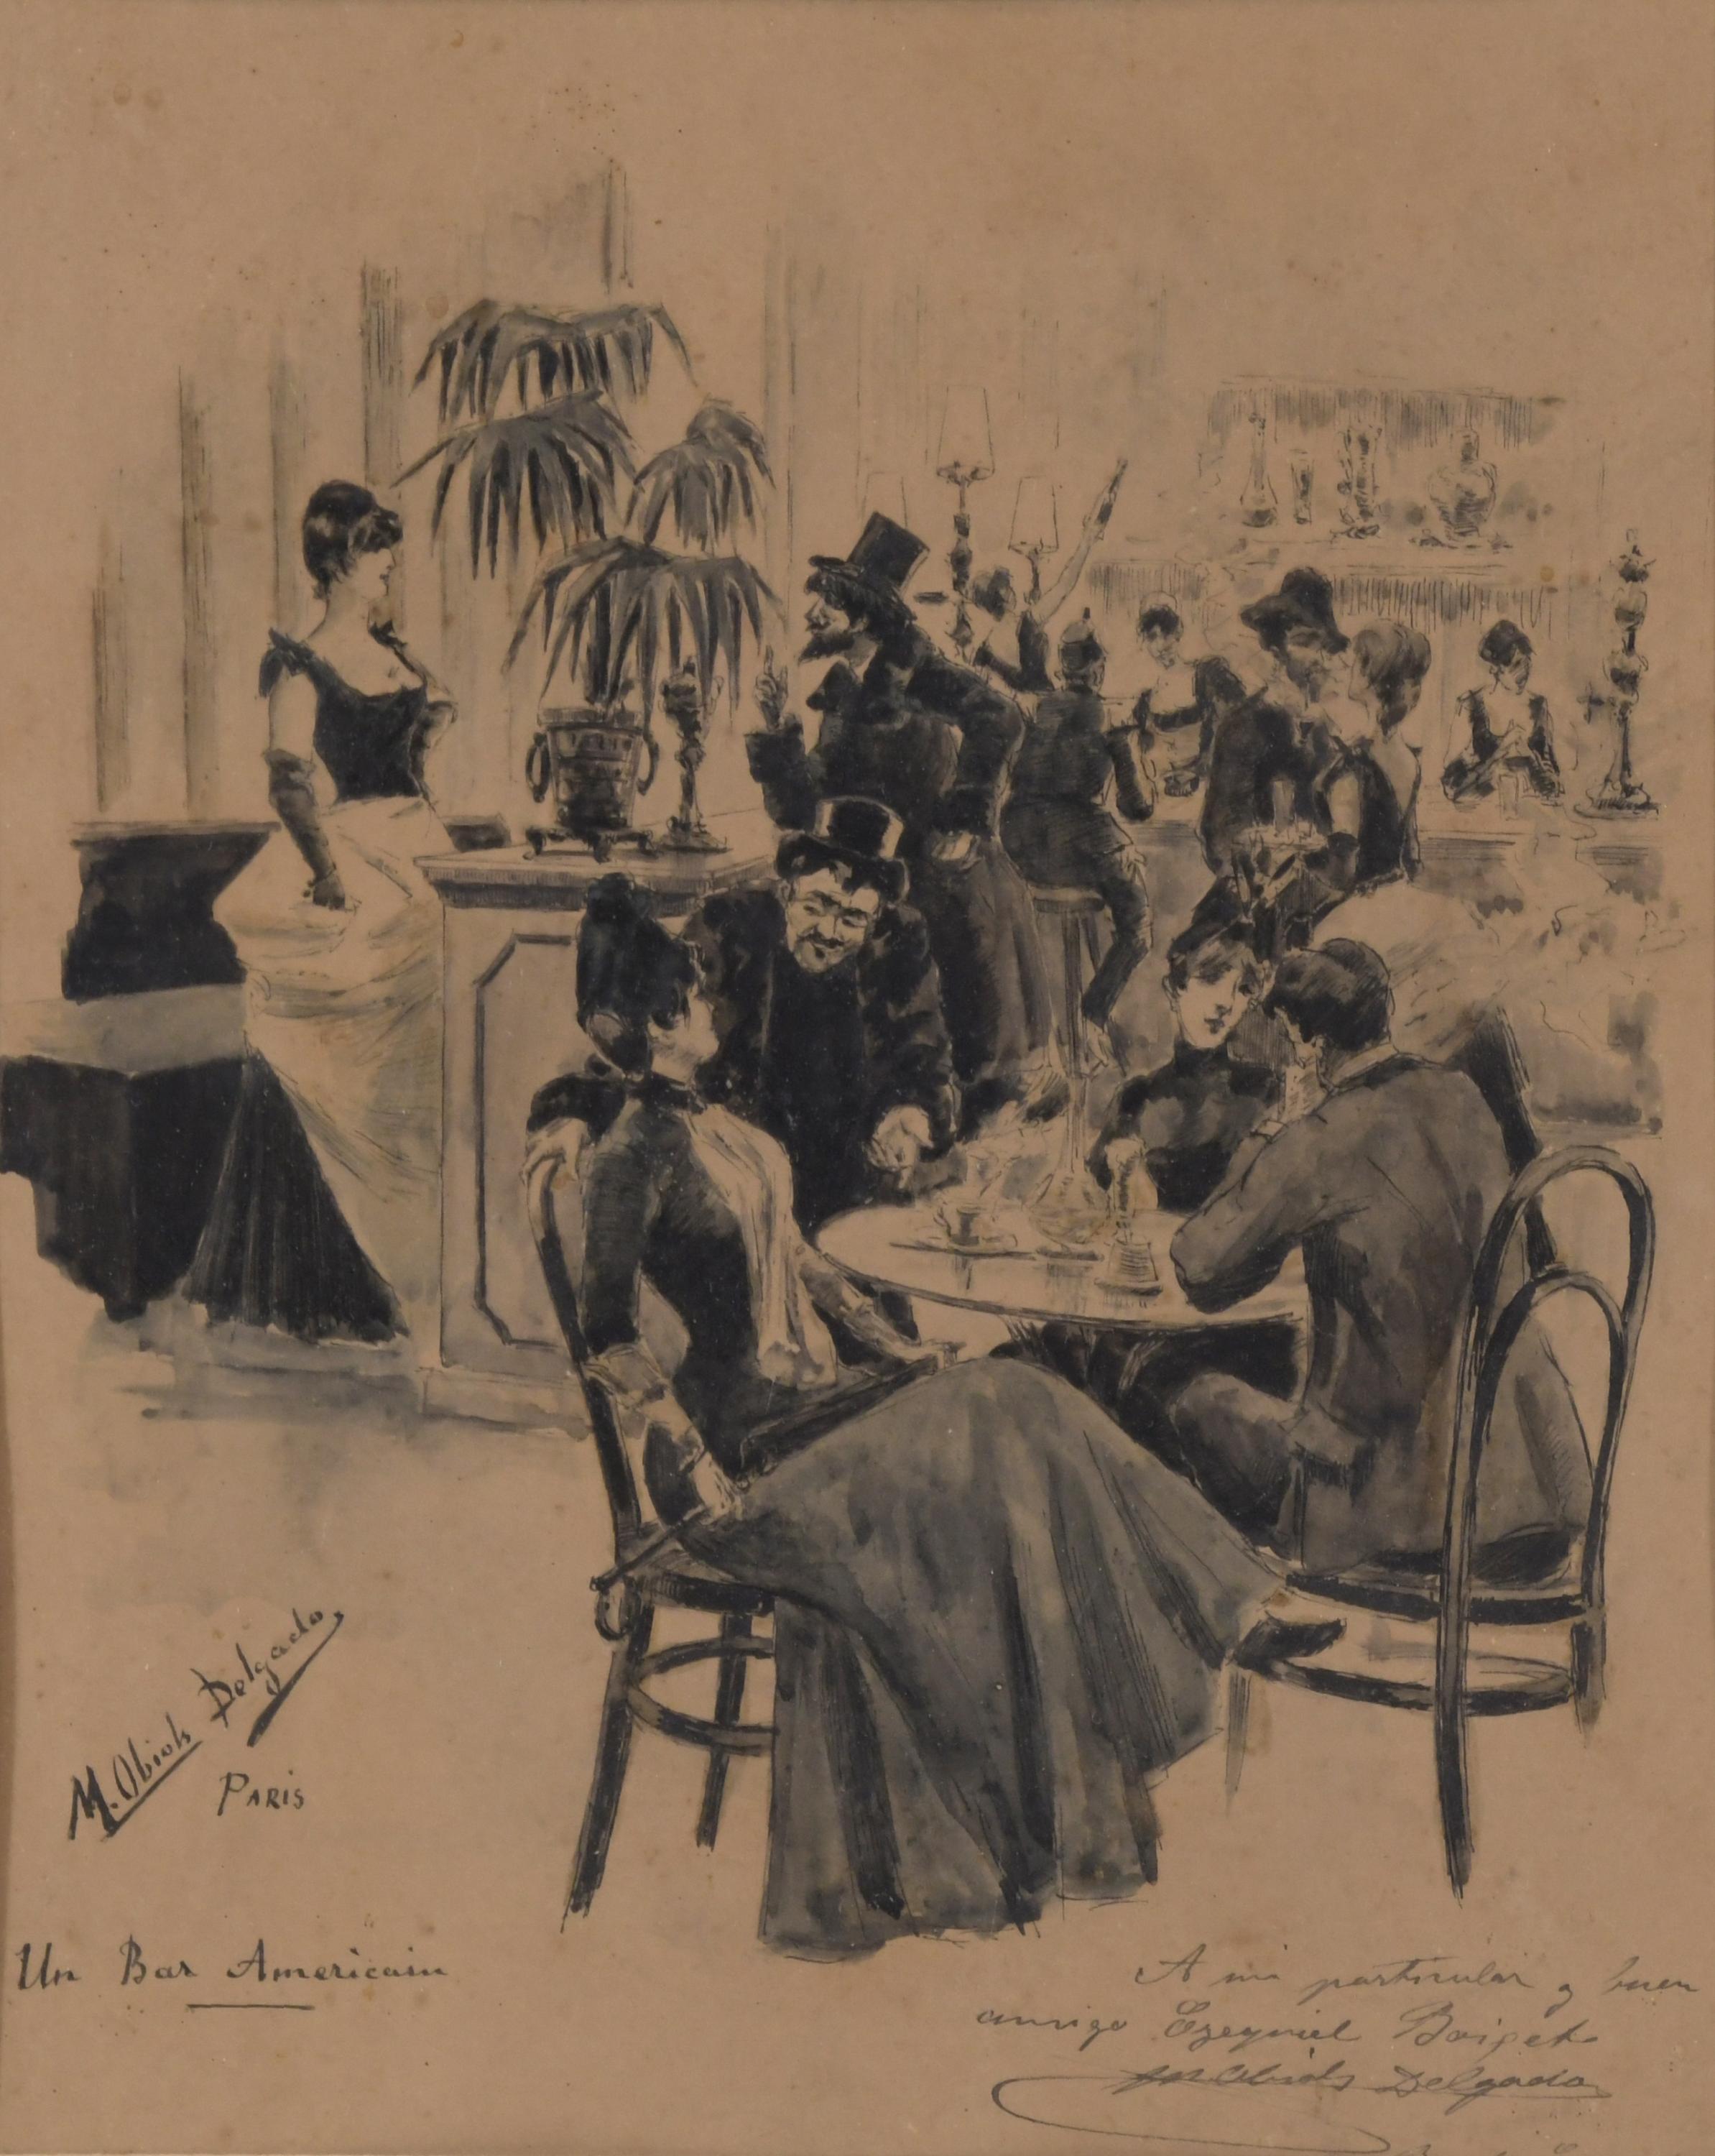 MARIANO OBIOLS DELGADO (c.1860-1911) "UN BAR AMERICAIN", Pa